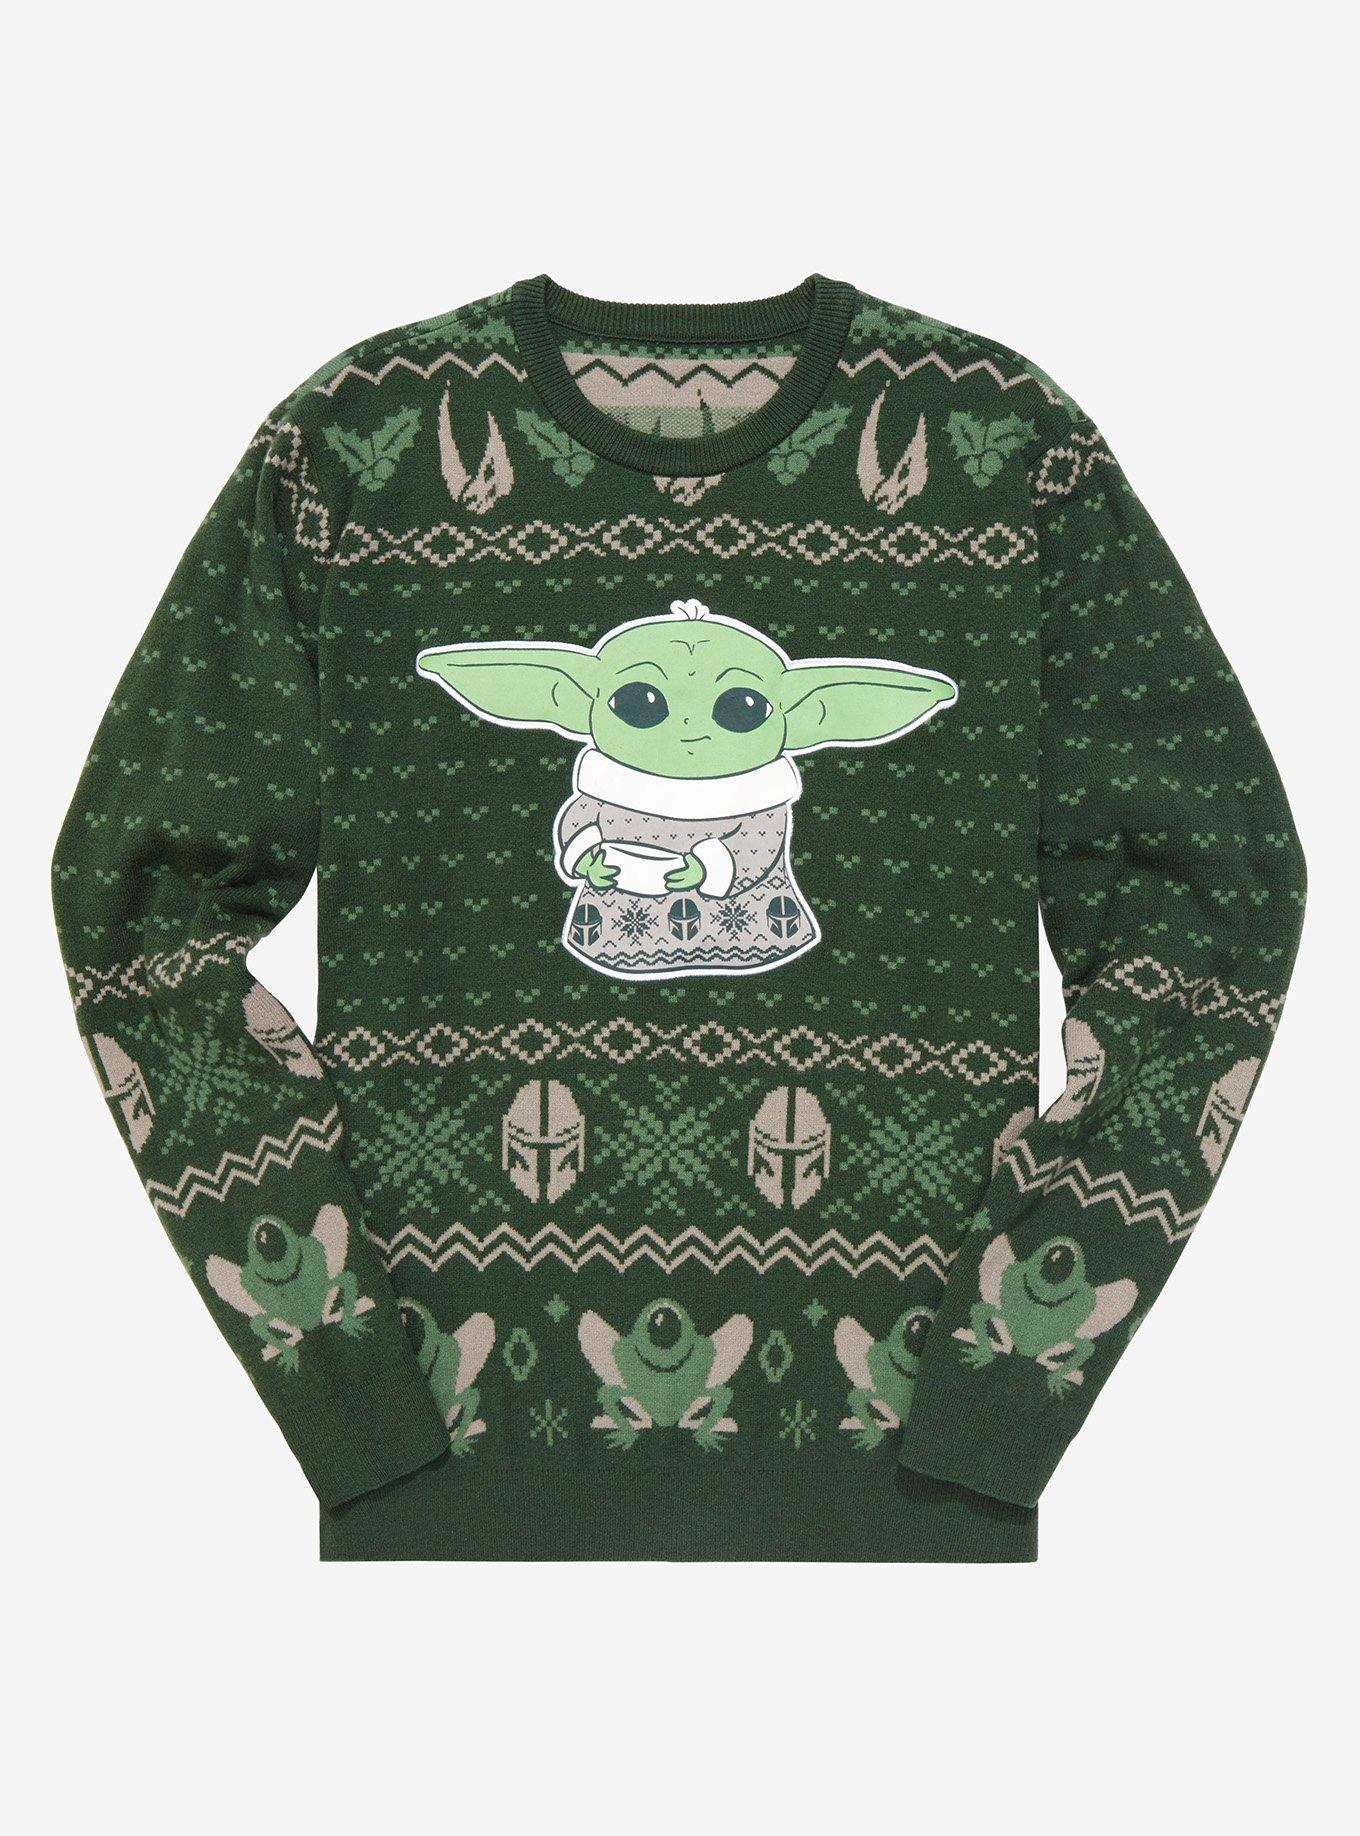 Star Wars: The Mandalorian Grogu The Child Holiday Sweater Plush : Target